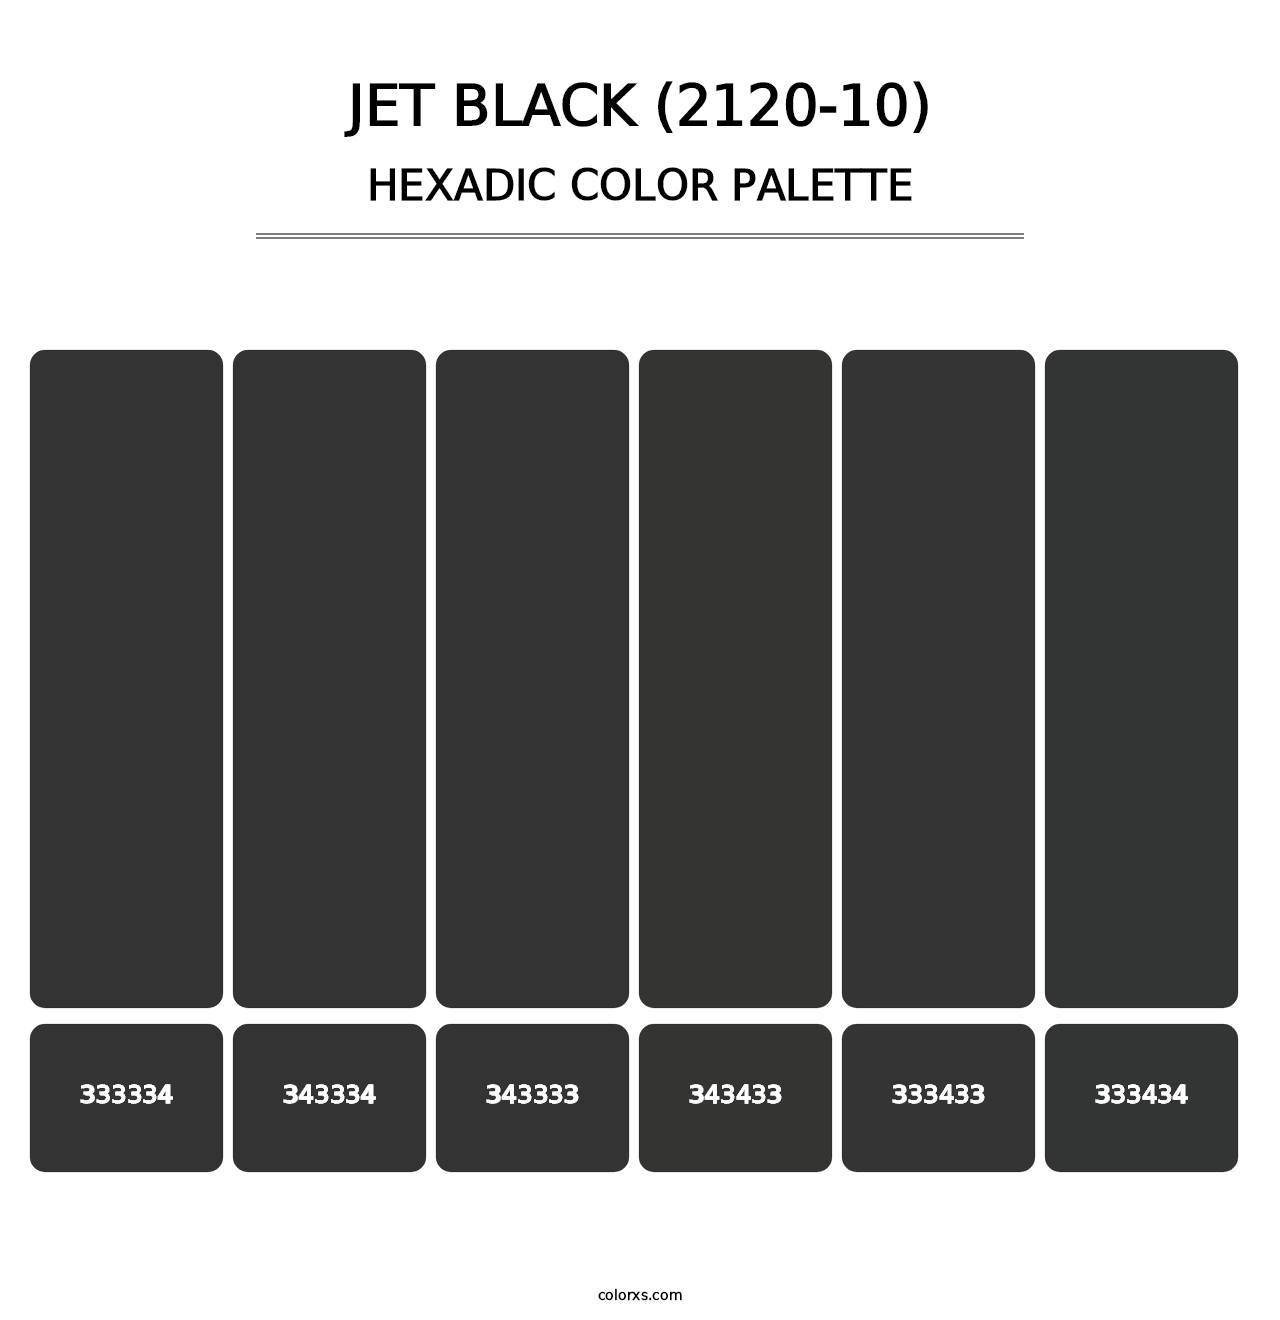 Jet Black (2120-10) - Hexadic Color Palette